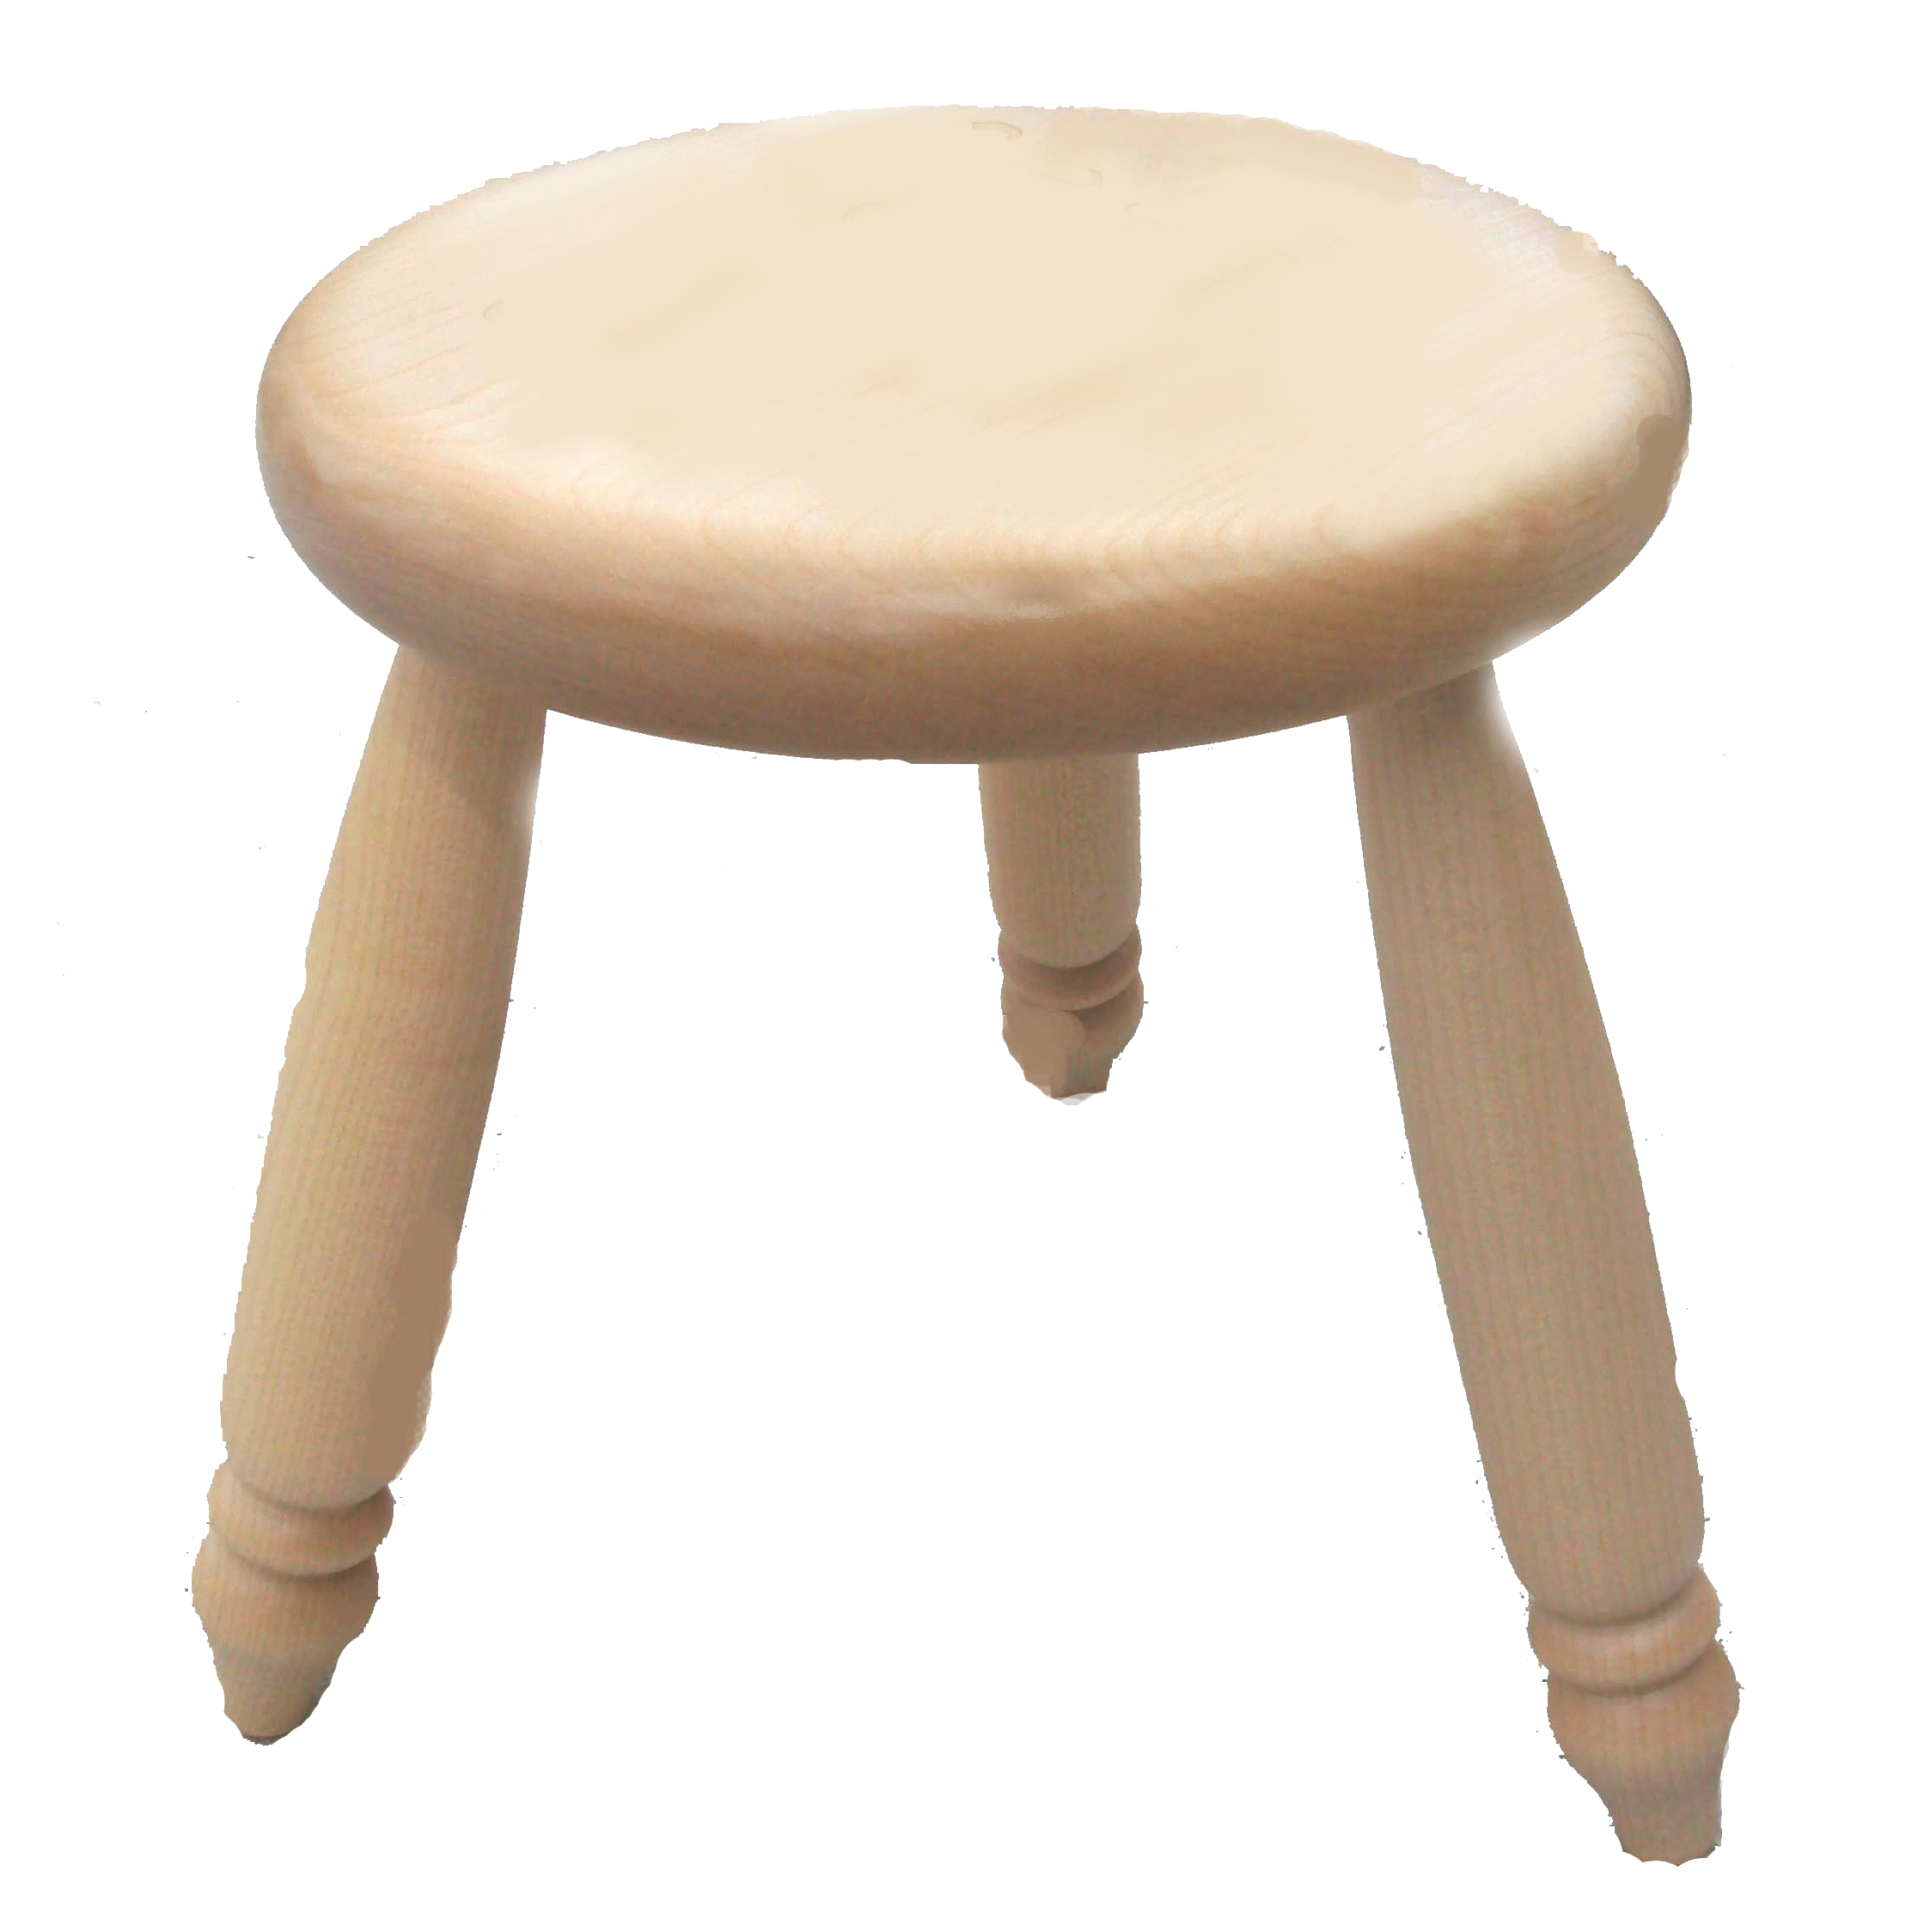 Legged milking stool blank pyrography blanks wood products